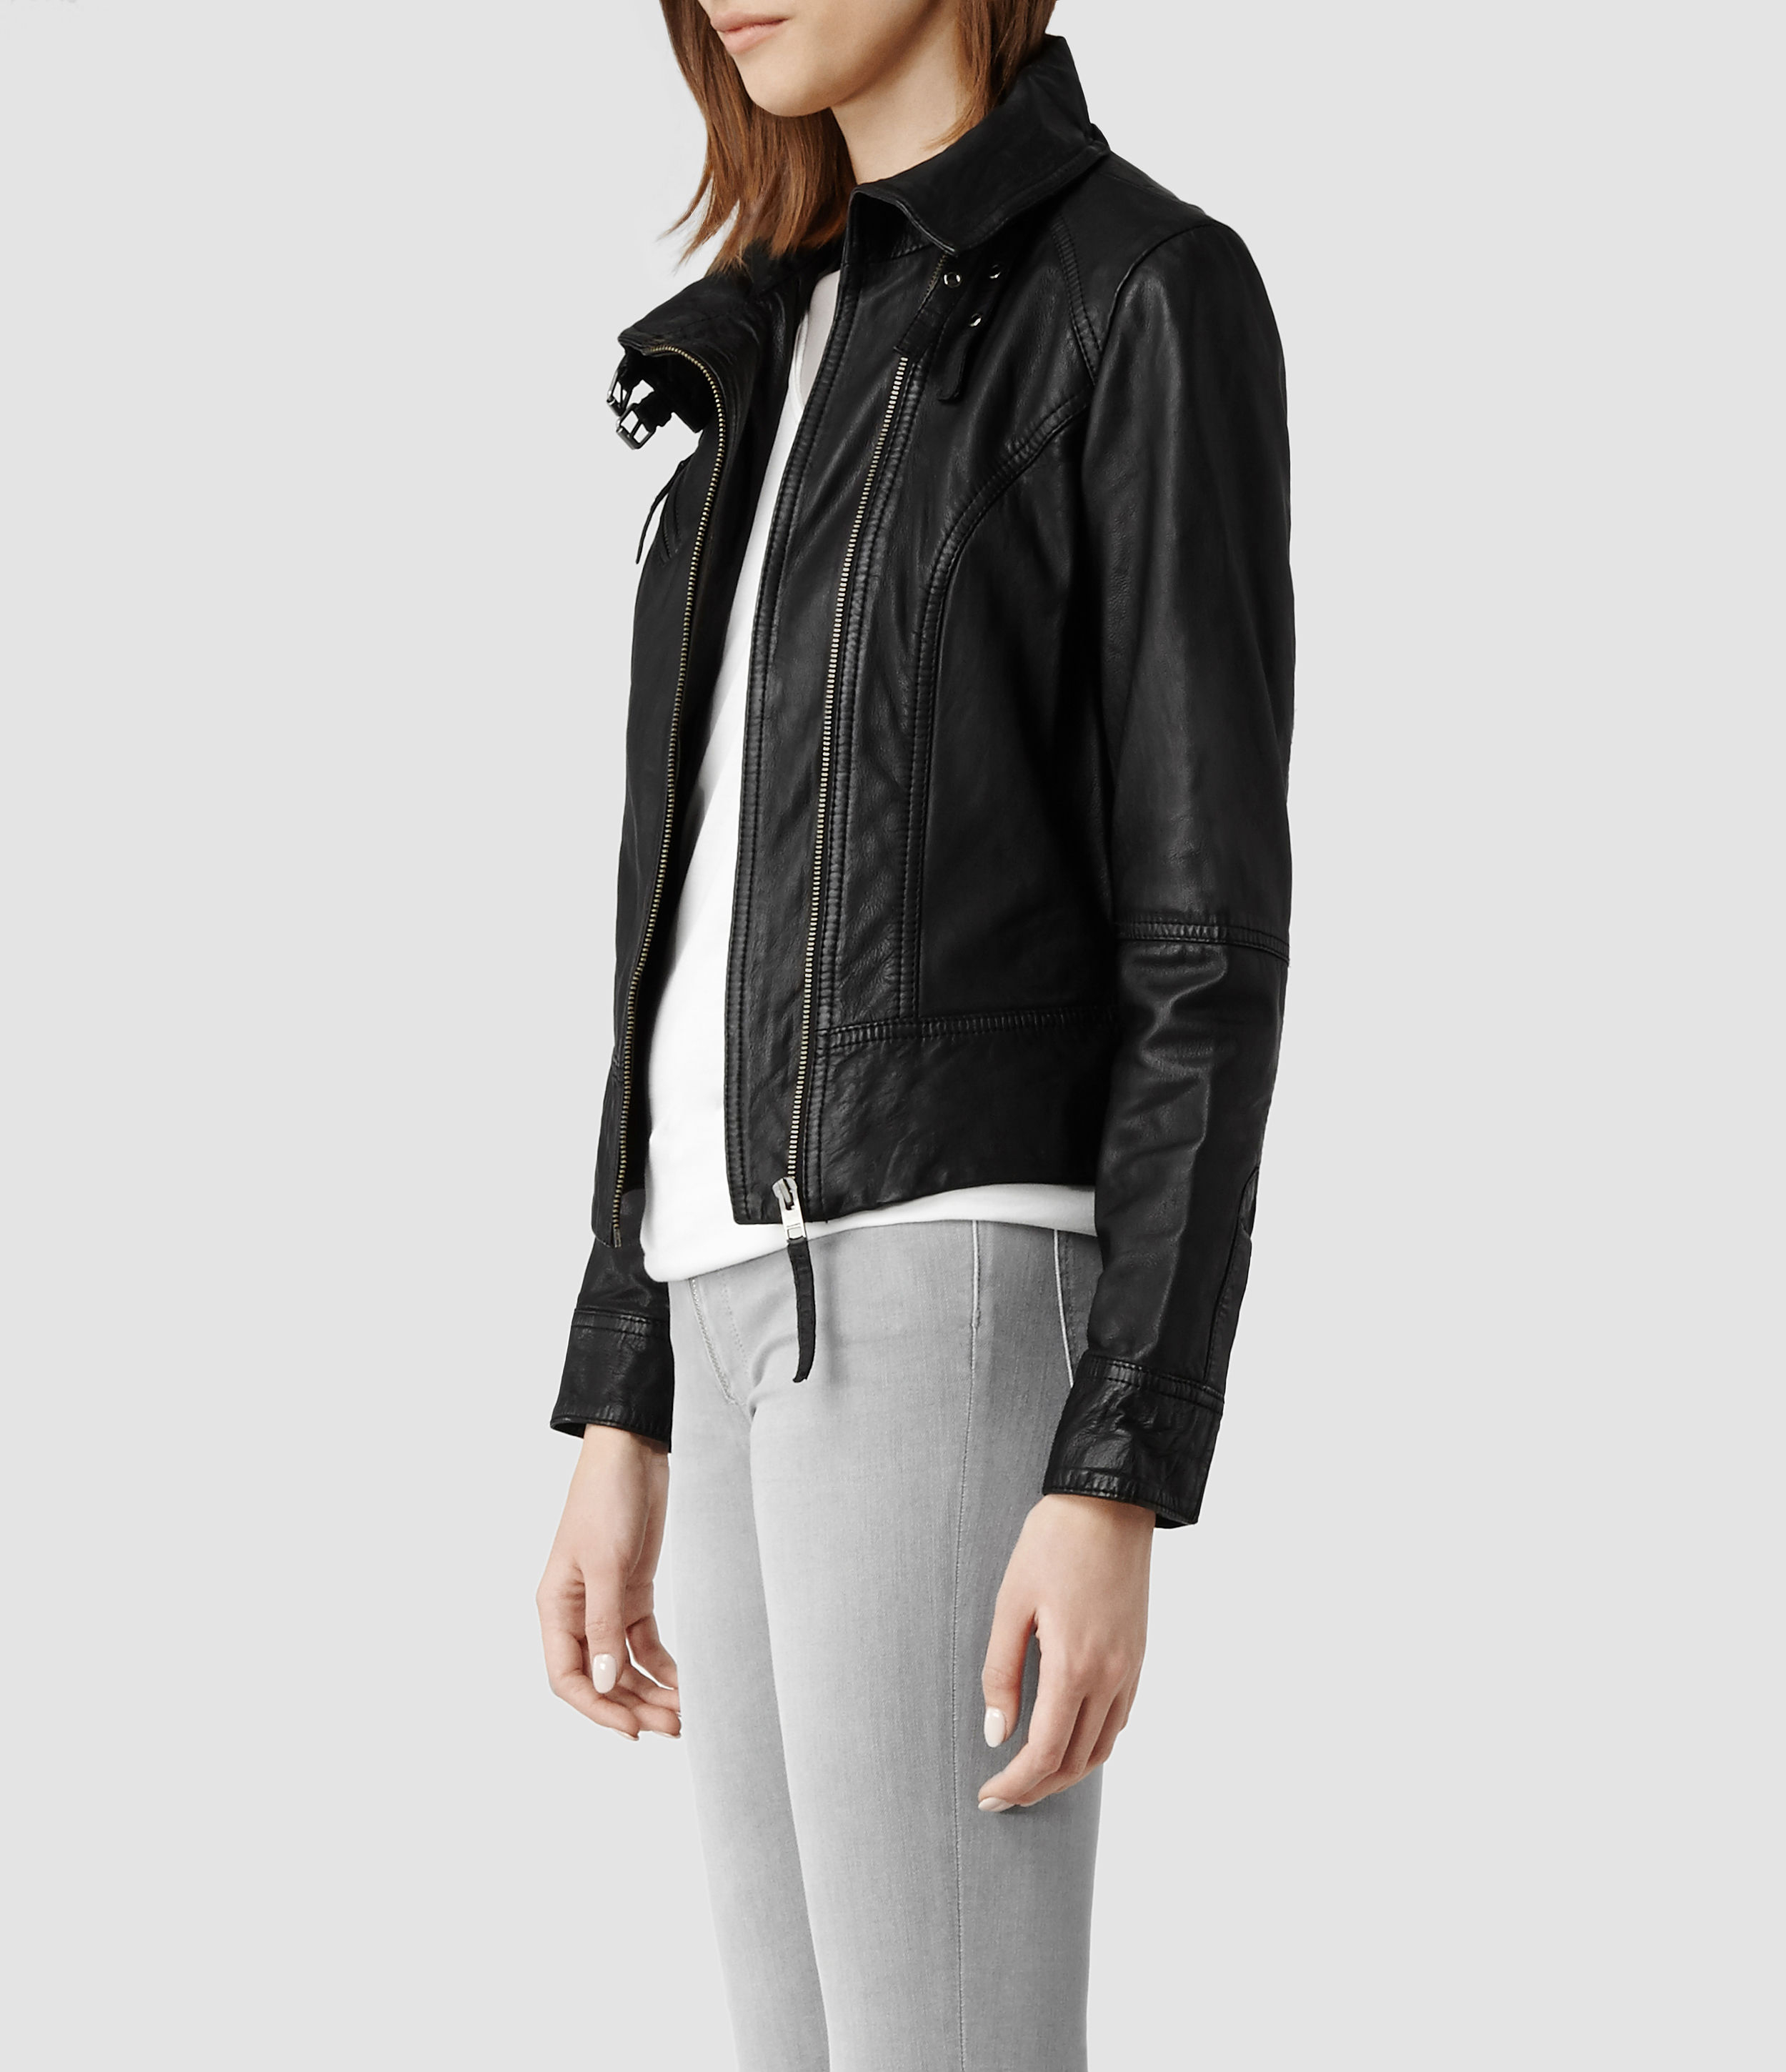 AllSaints Belvedere Leather Jacket in Black - Lyst